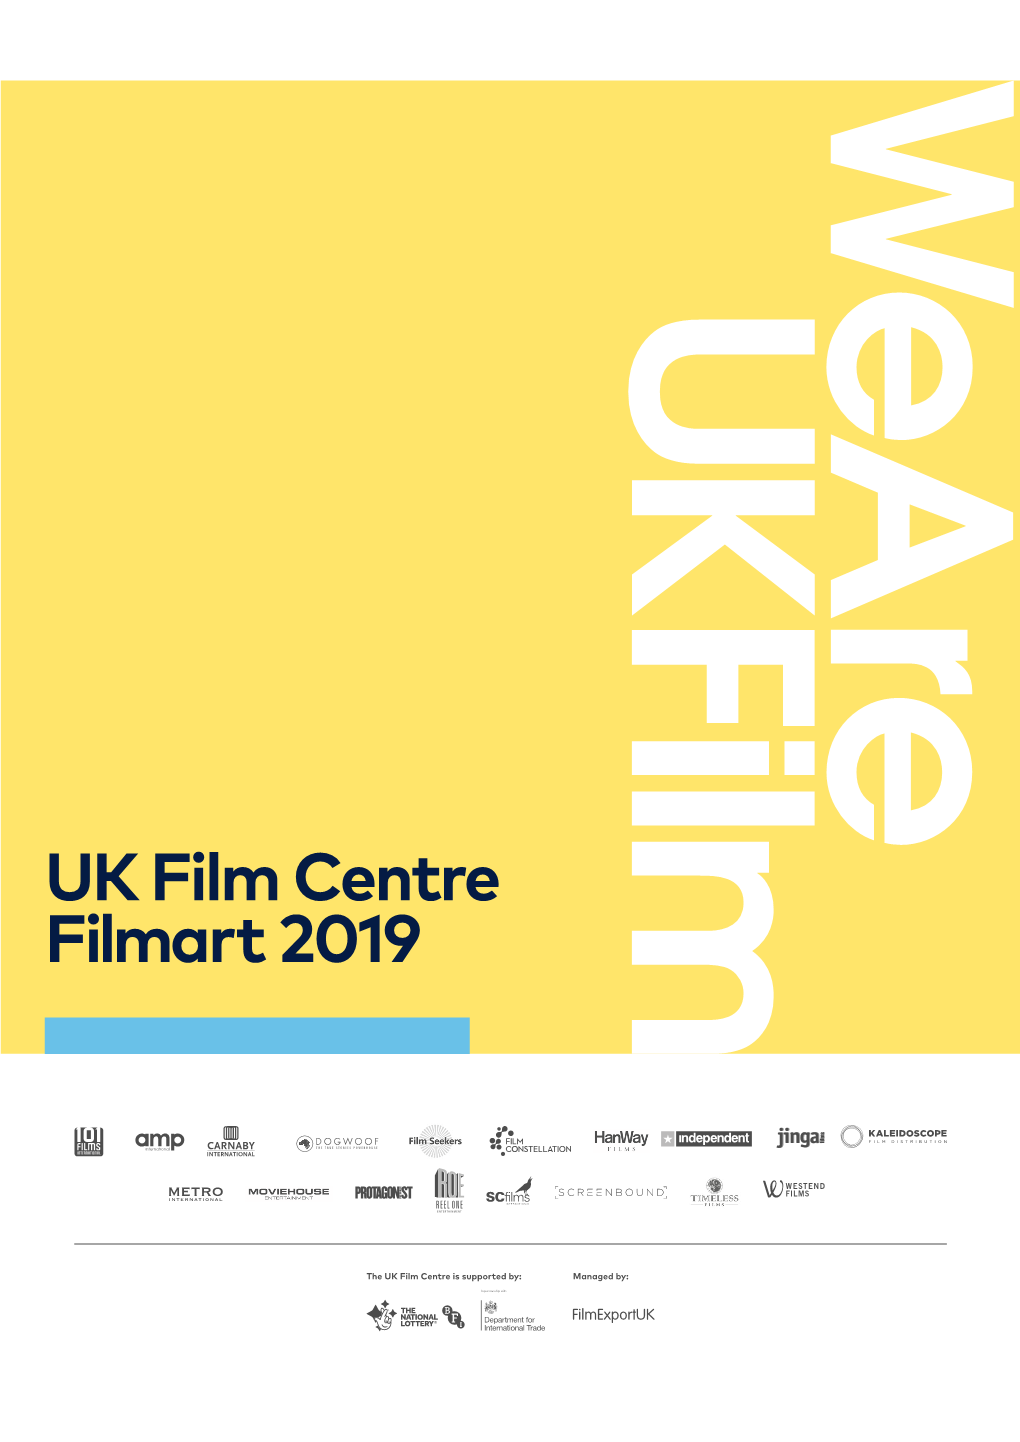 UK Film Centre Filmart 2019 UK Film Support Organisations